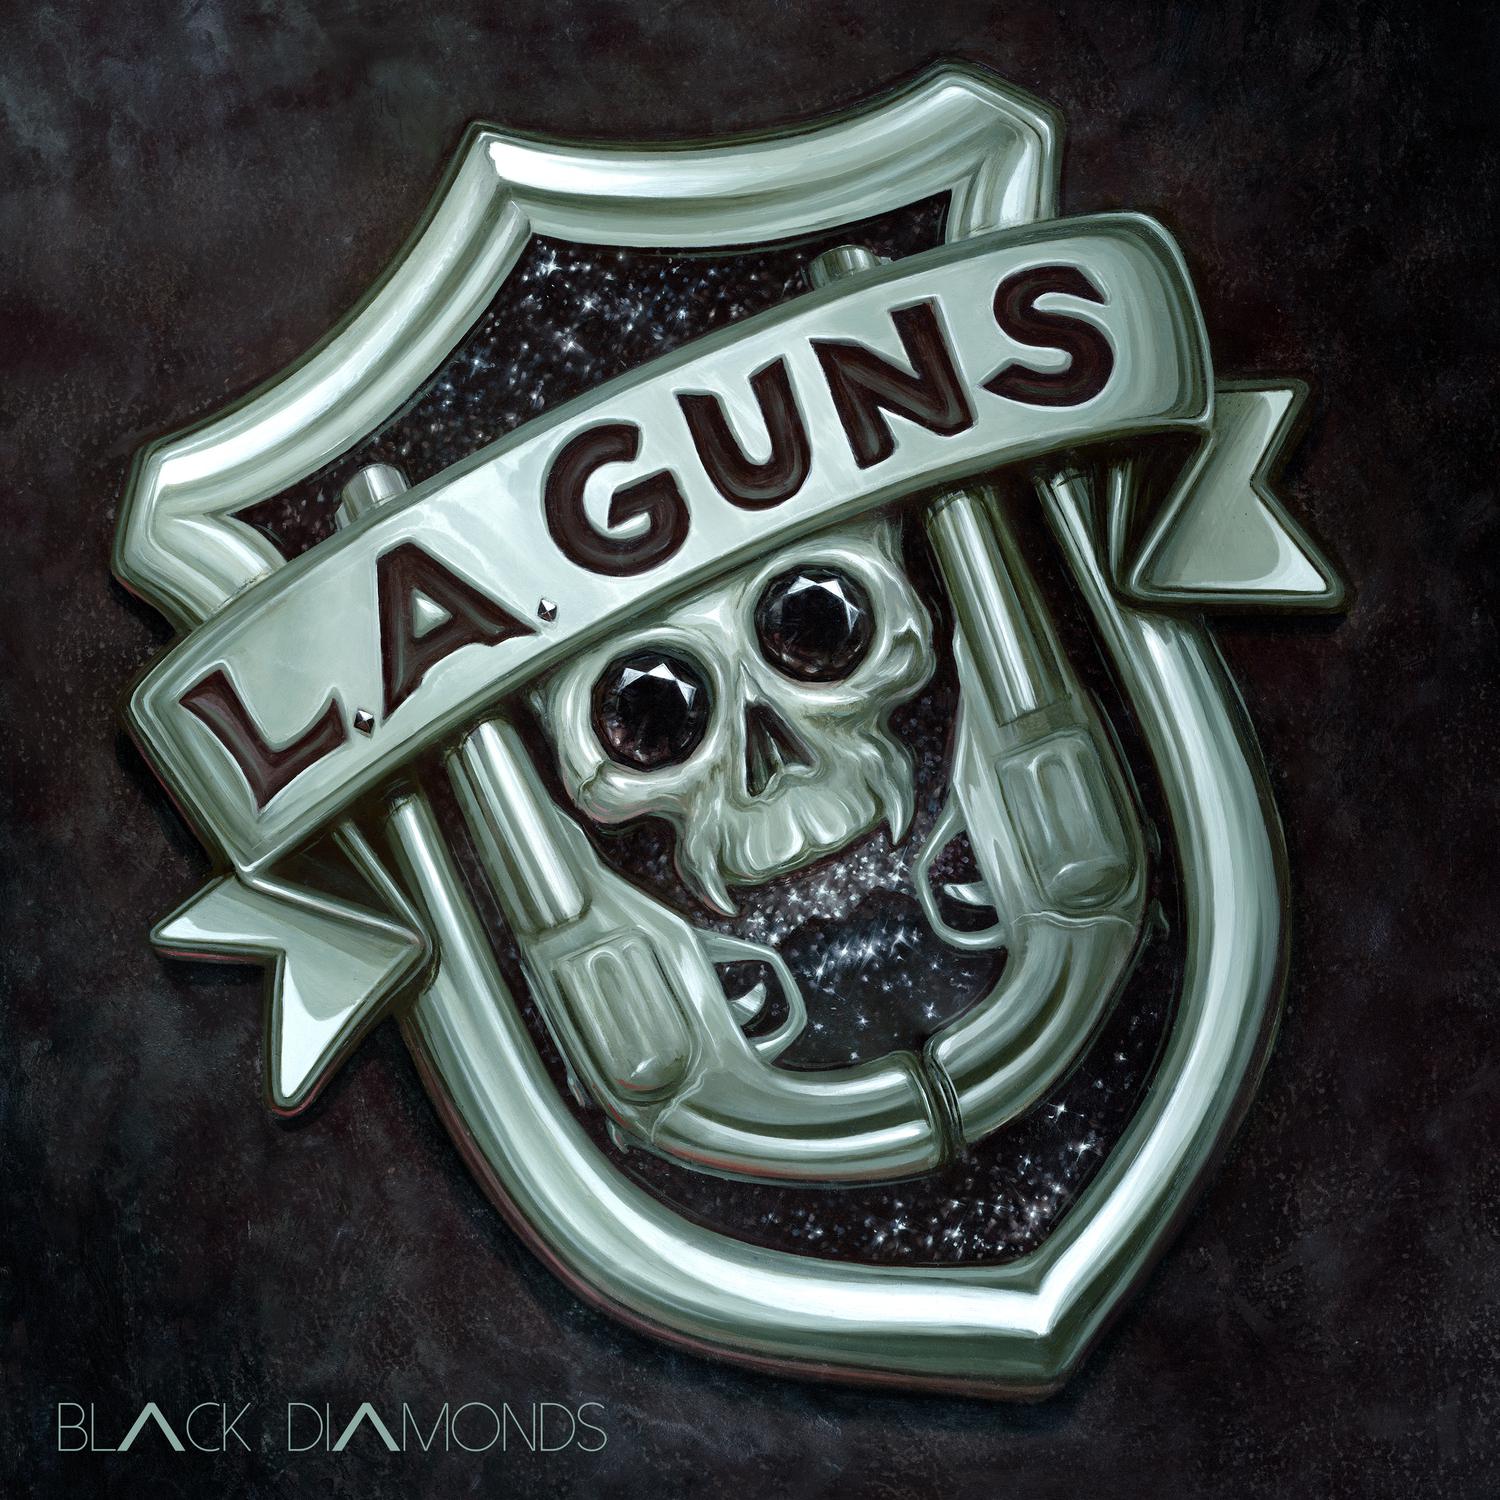 L.A. Guns - Wrong About You